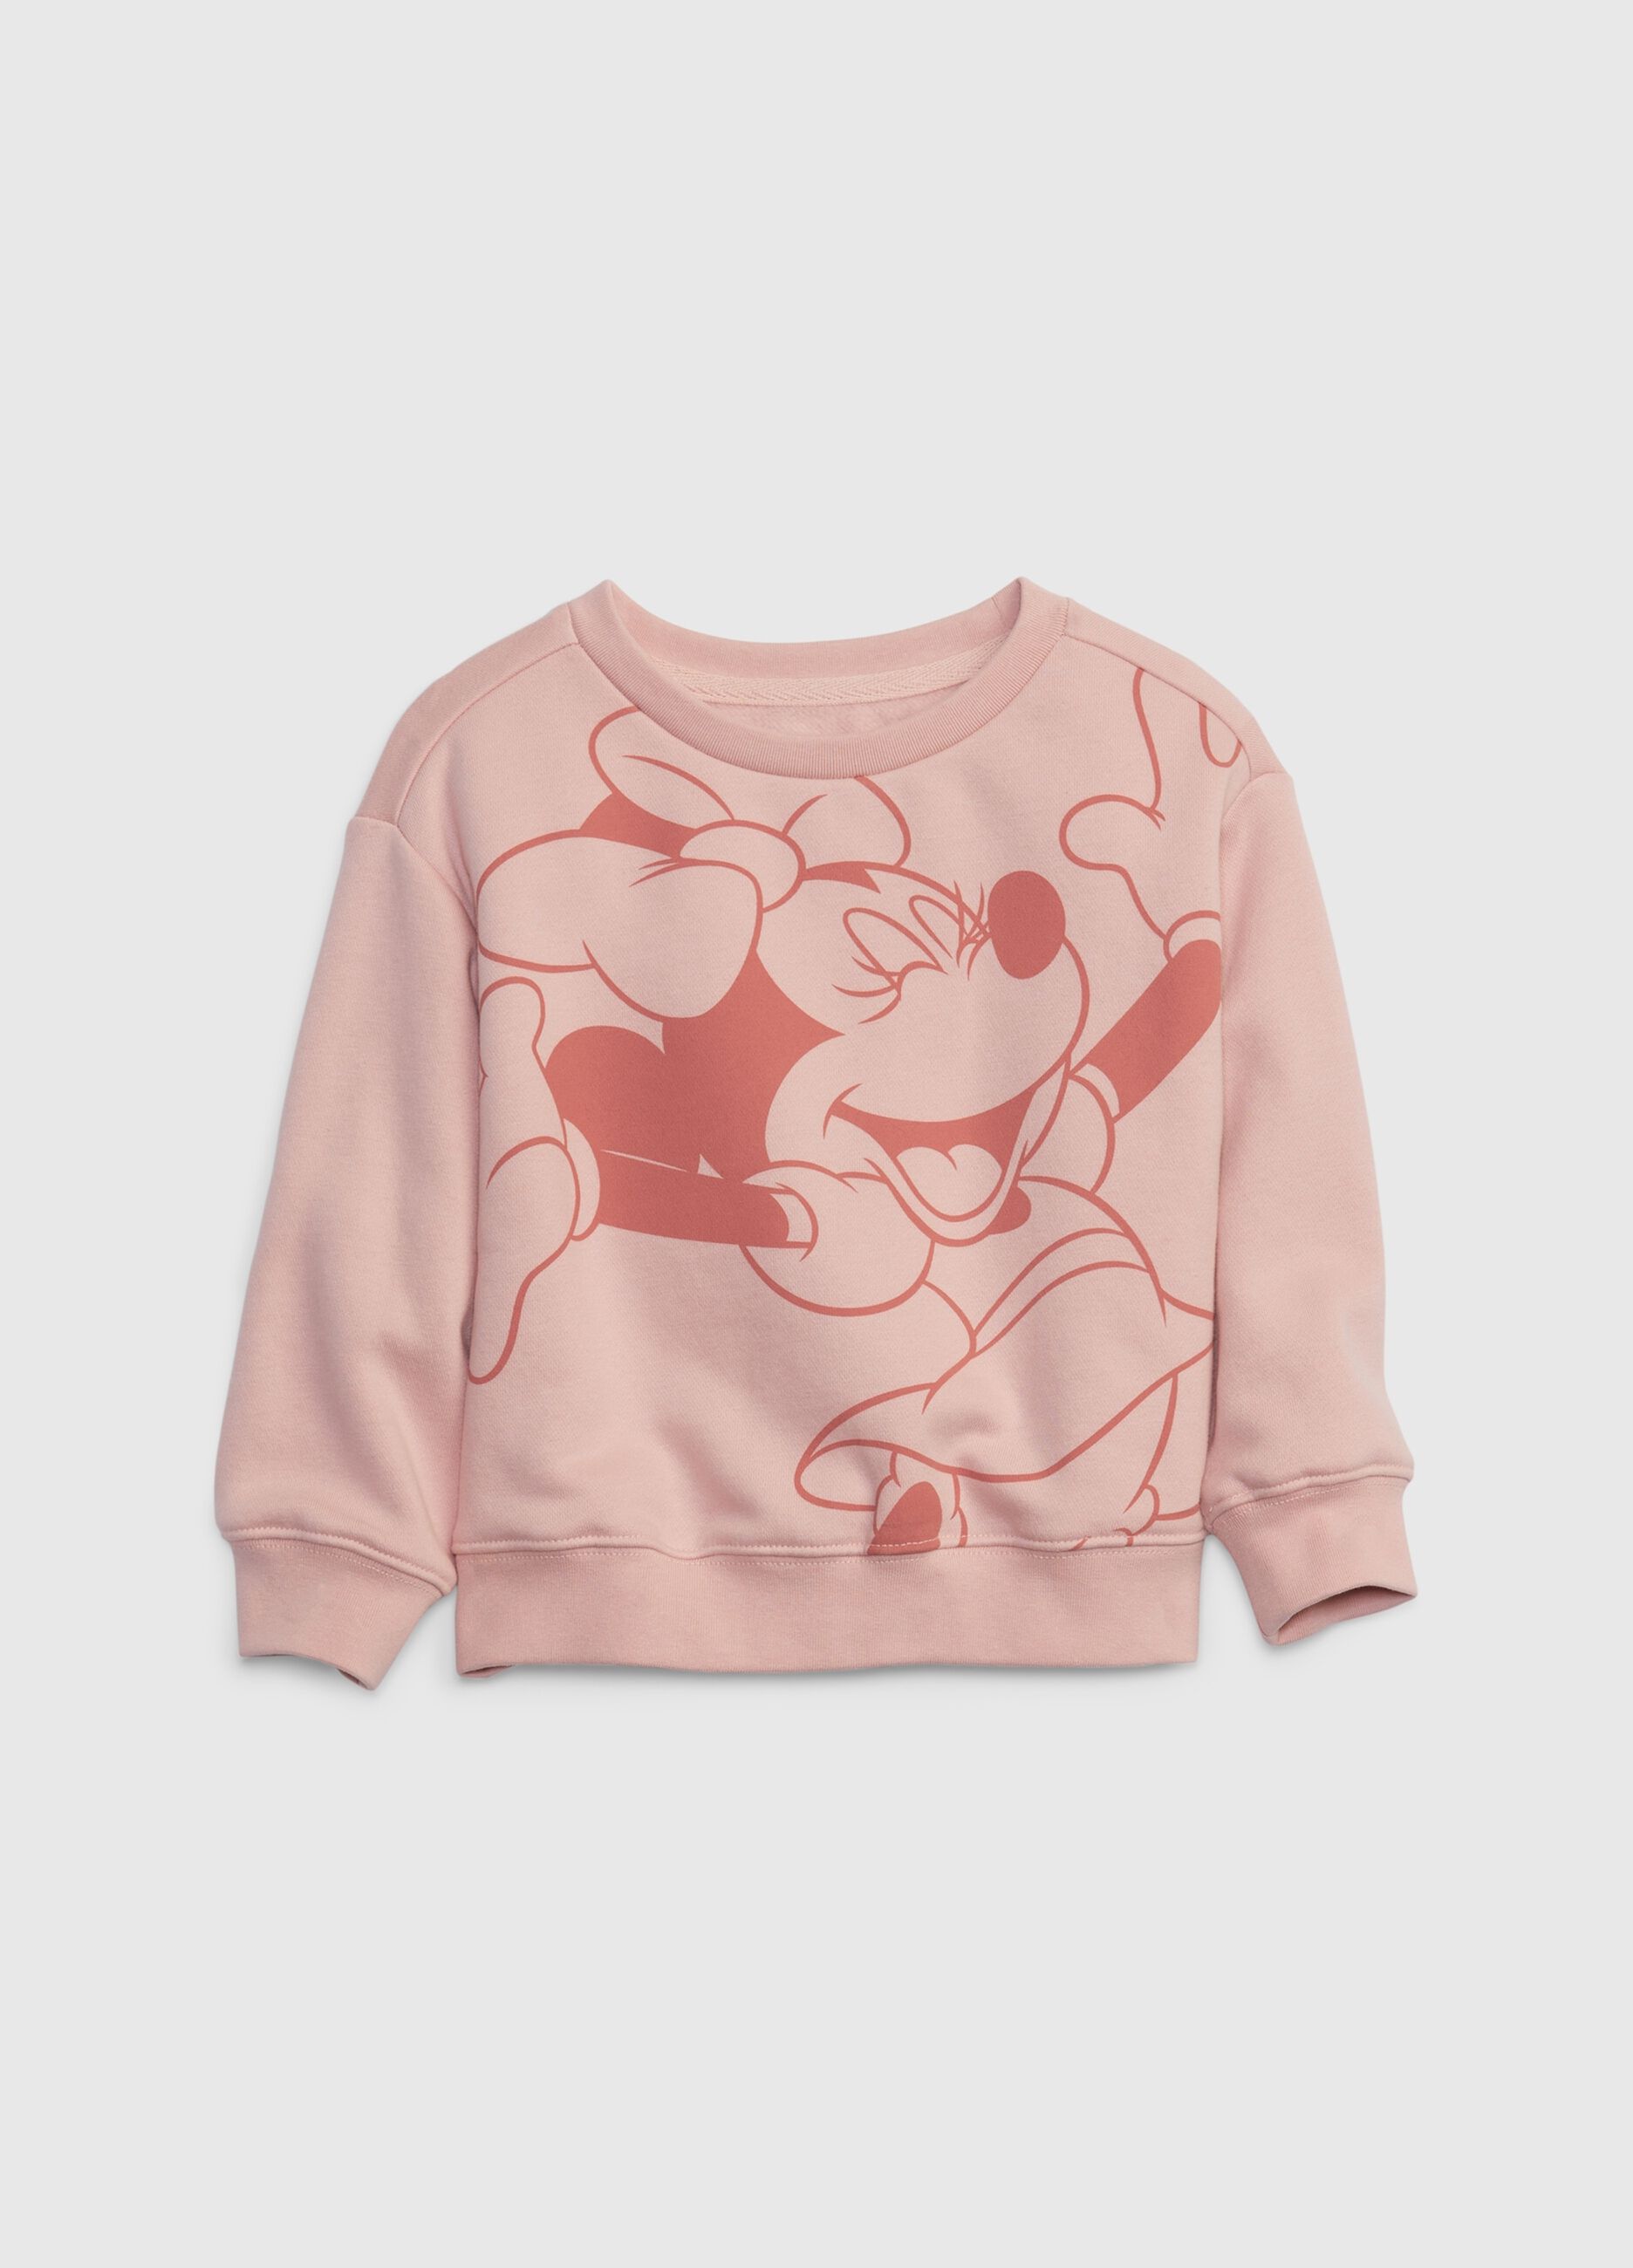 Oversized sweatshirt with Disney Minnie Mouse print